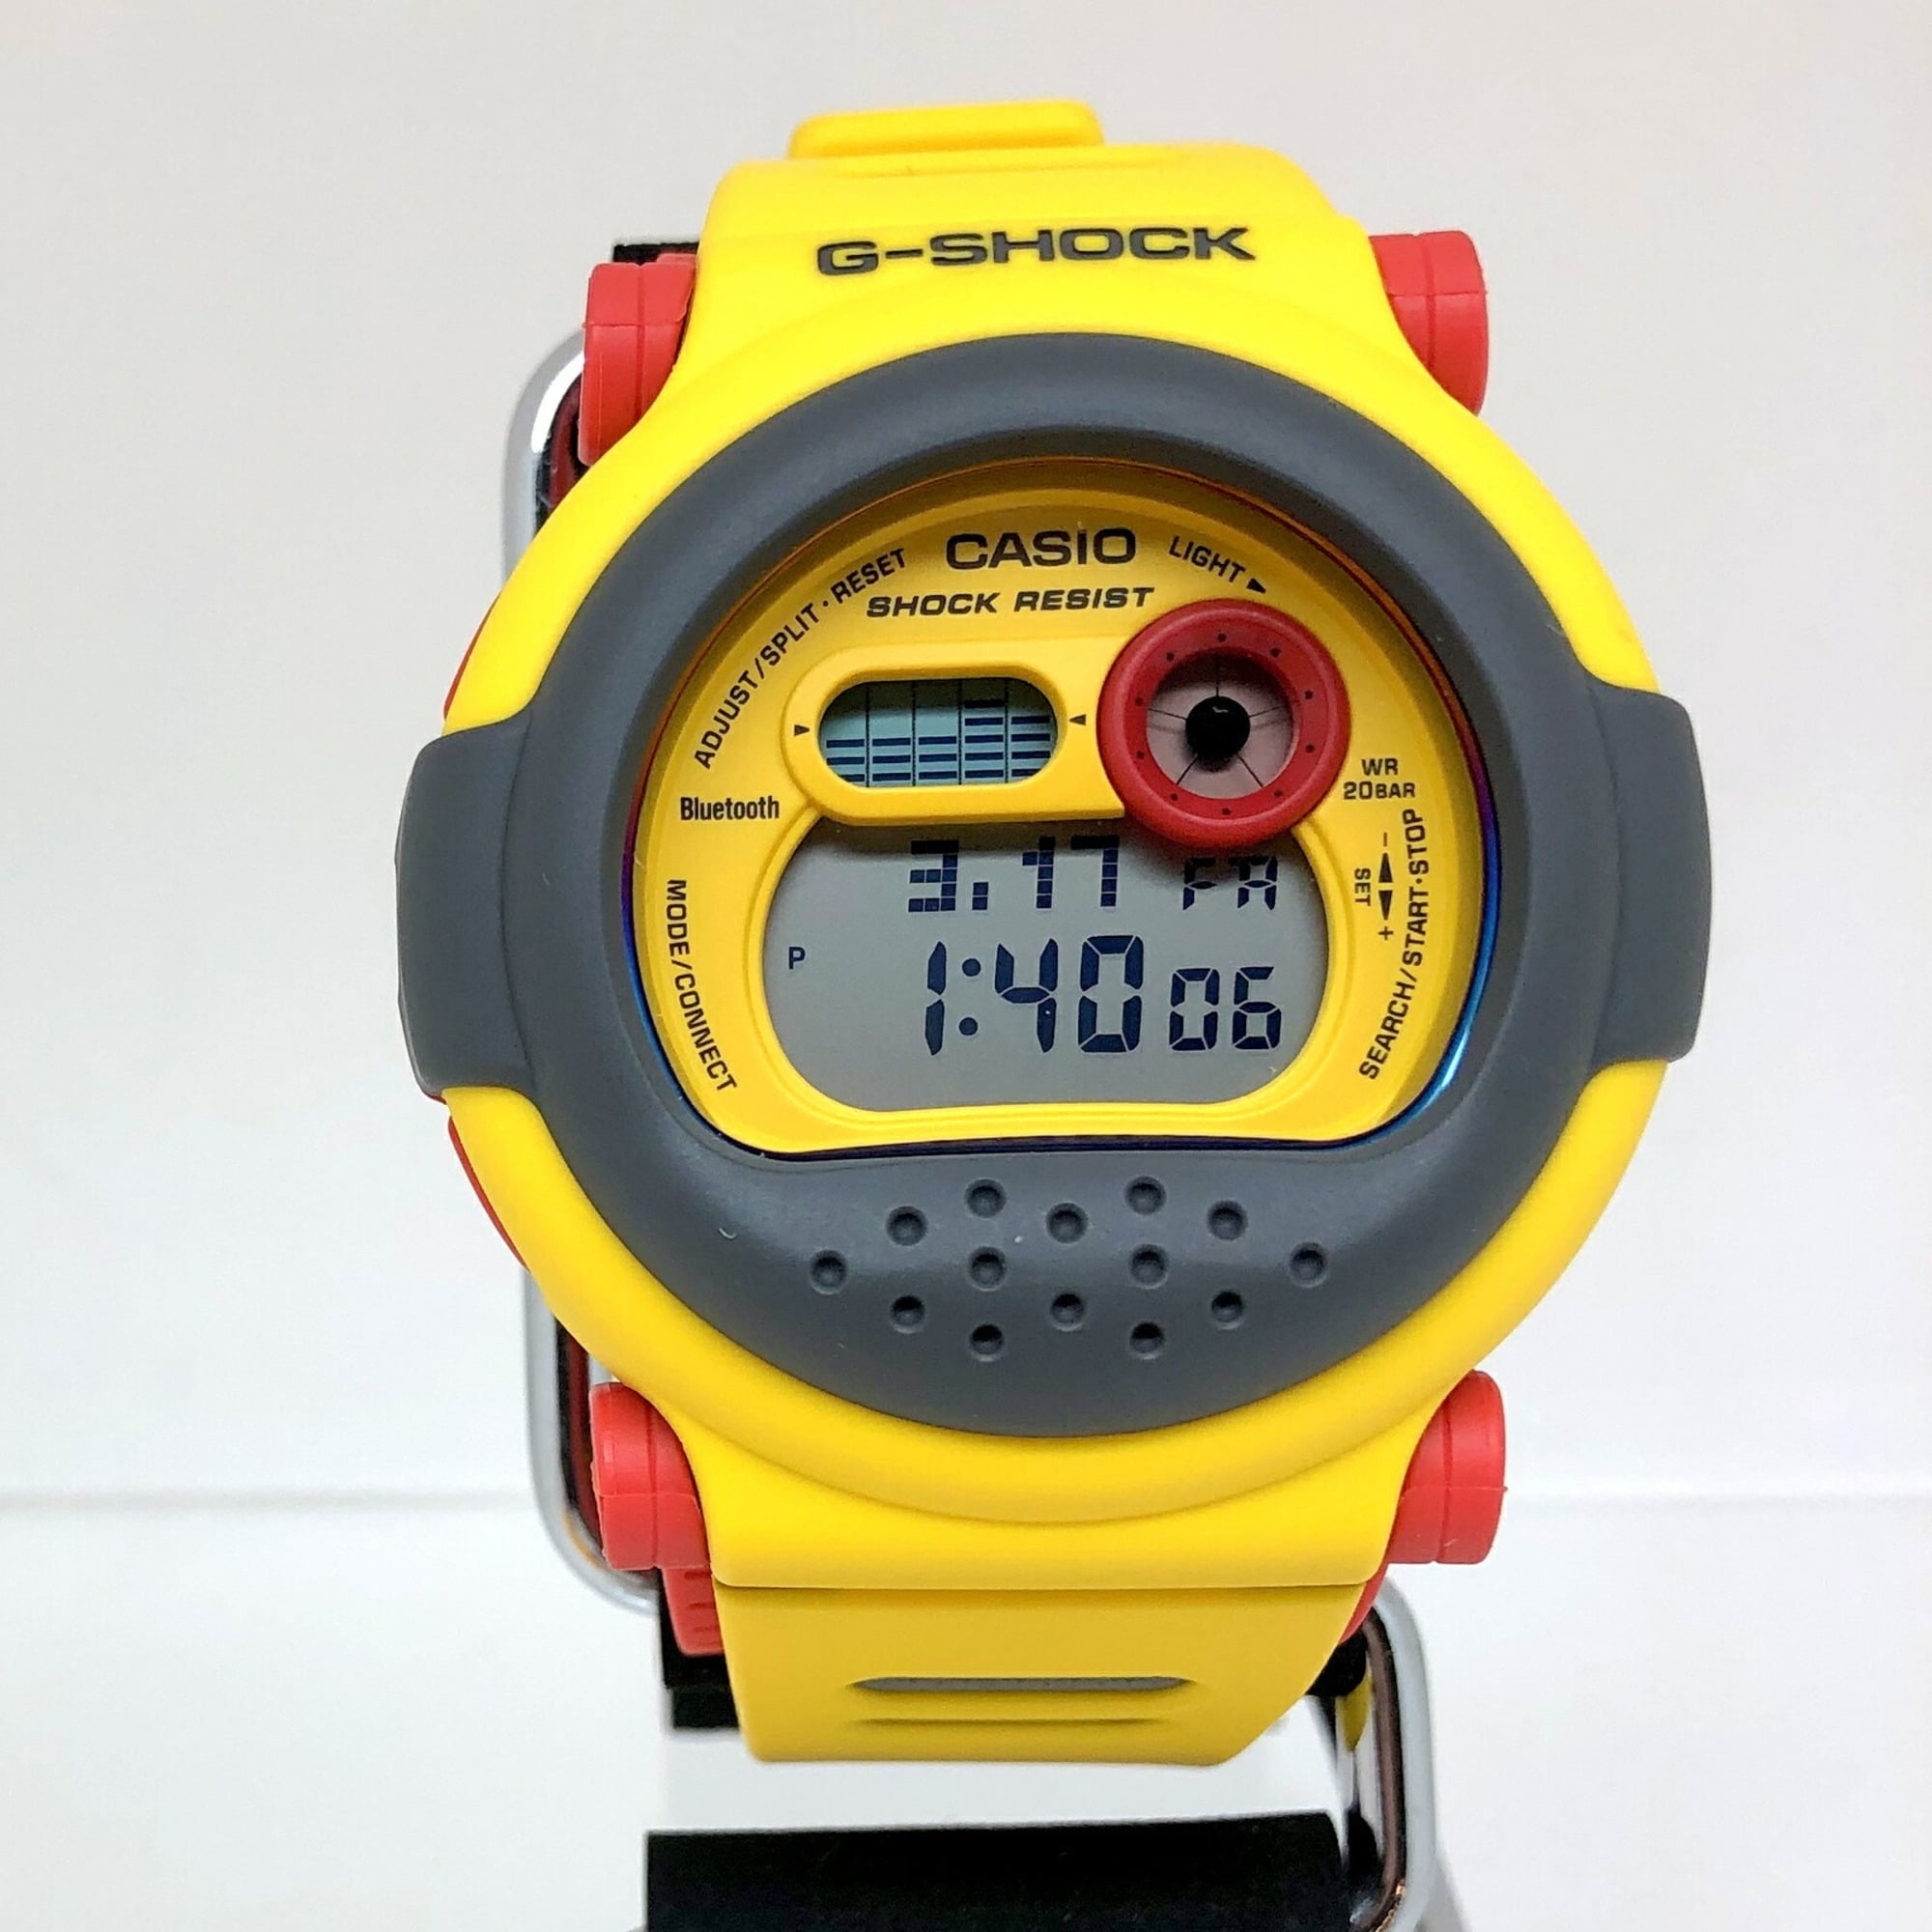 Authenticated Used G-SHOCK G-Shock CASIO Casio watch G-B001MVE-9JR digital  quartz DW-001 series yellow gray round face